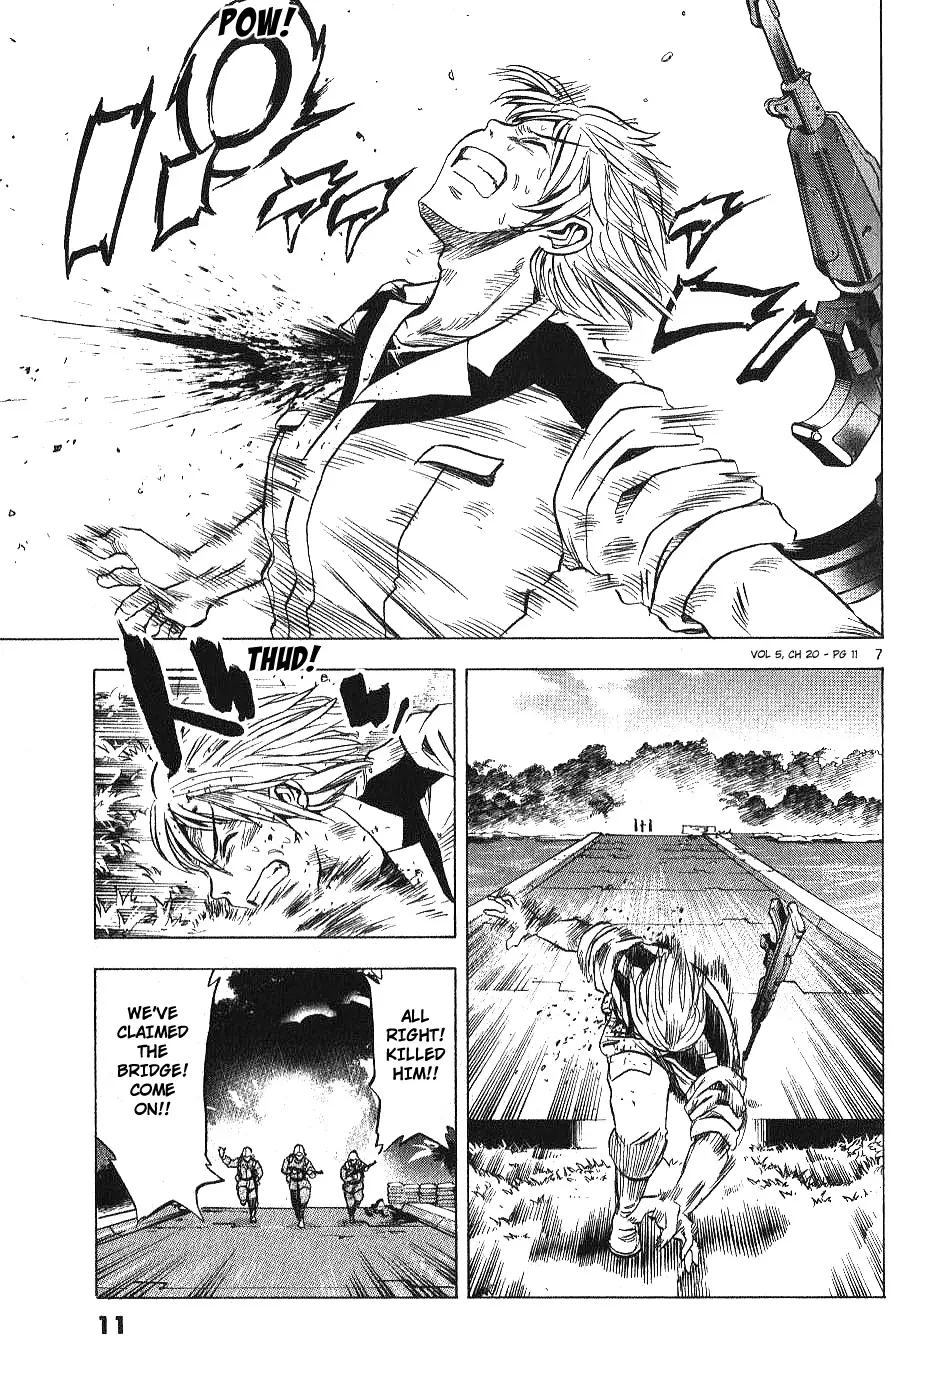 Mobile Suit Gundam Aggressor - 20 page 8-9c06dcea